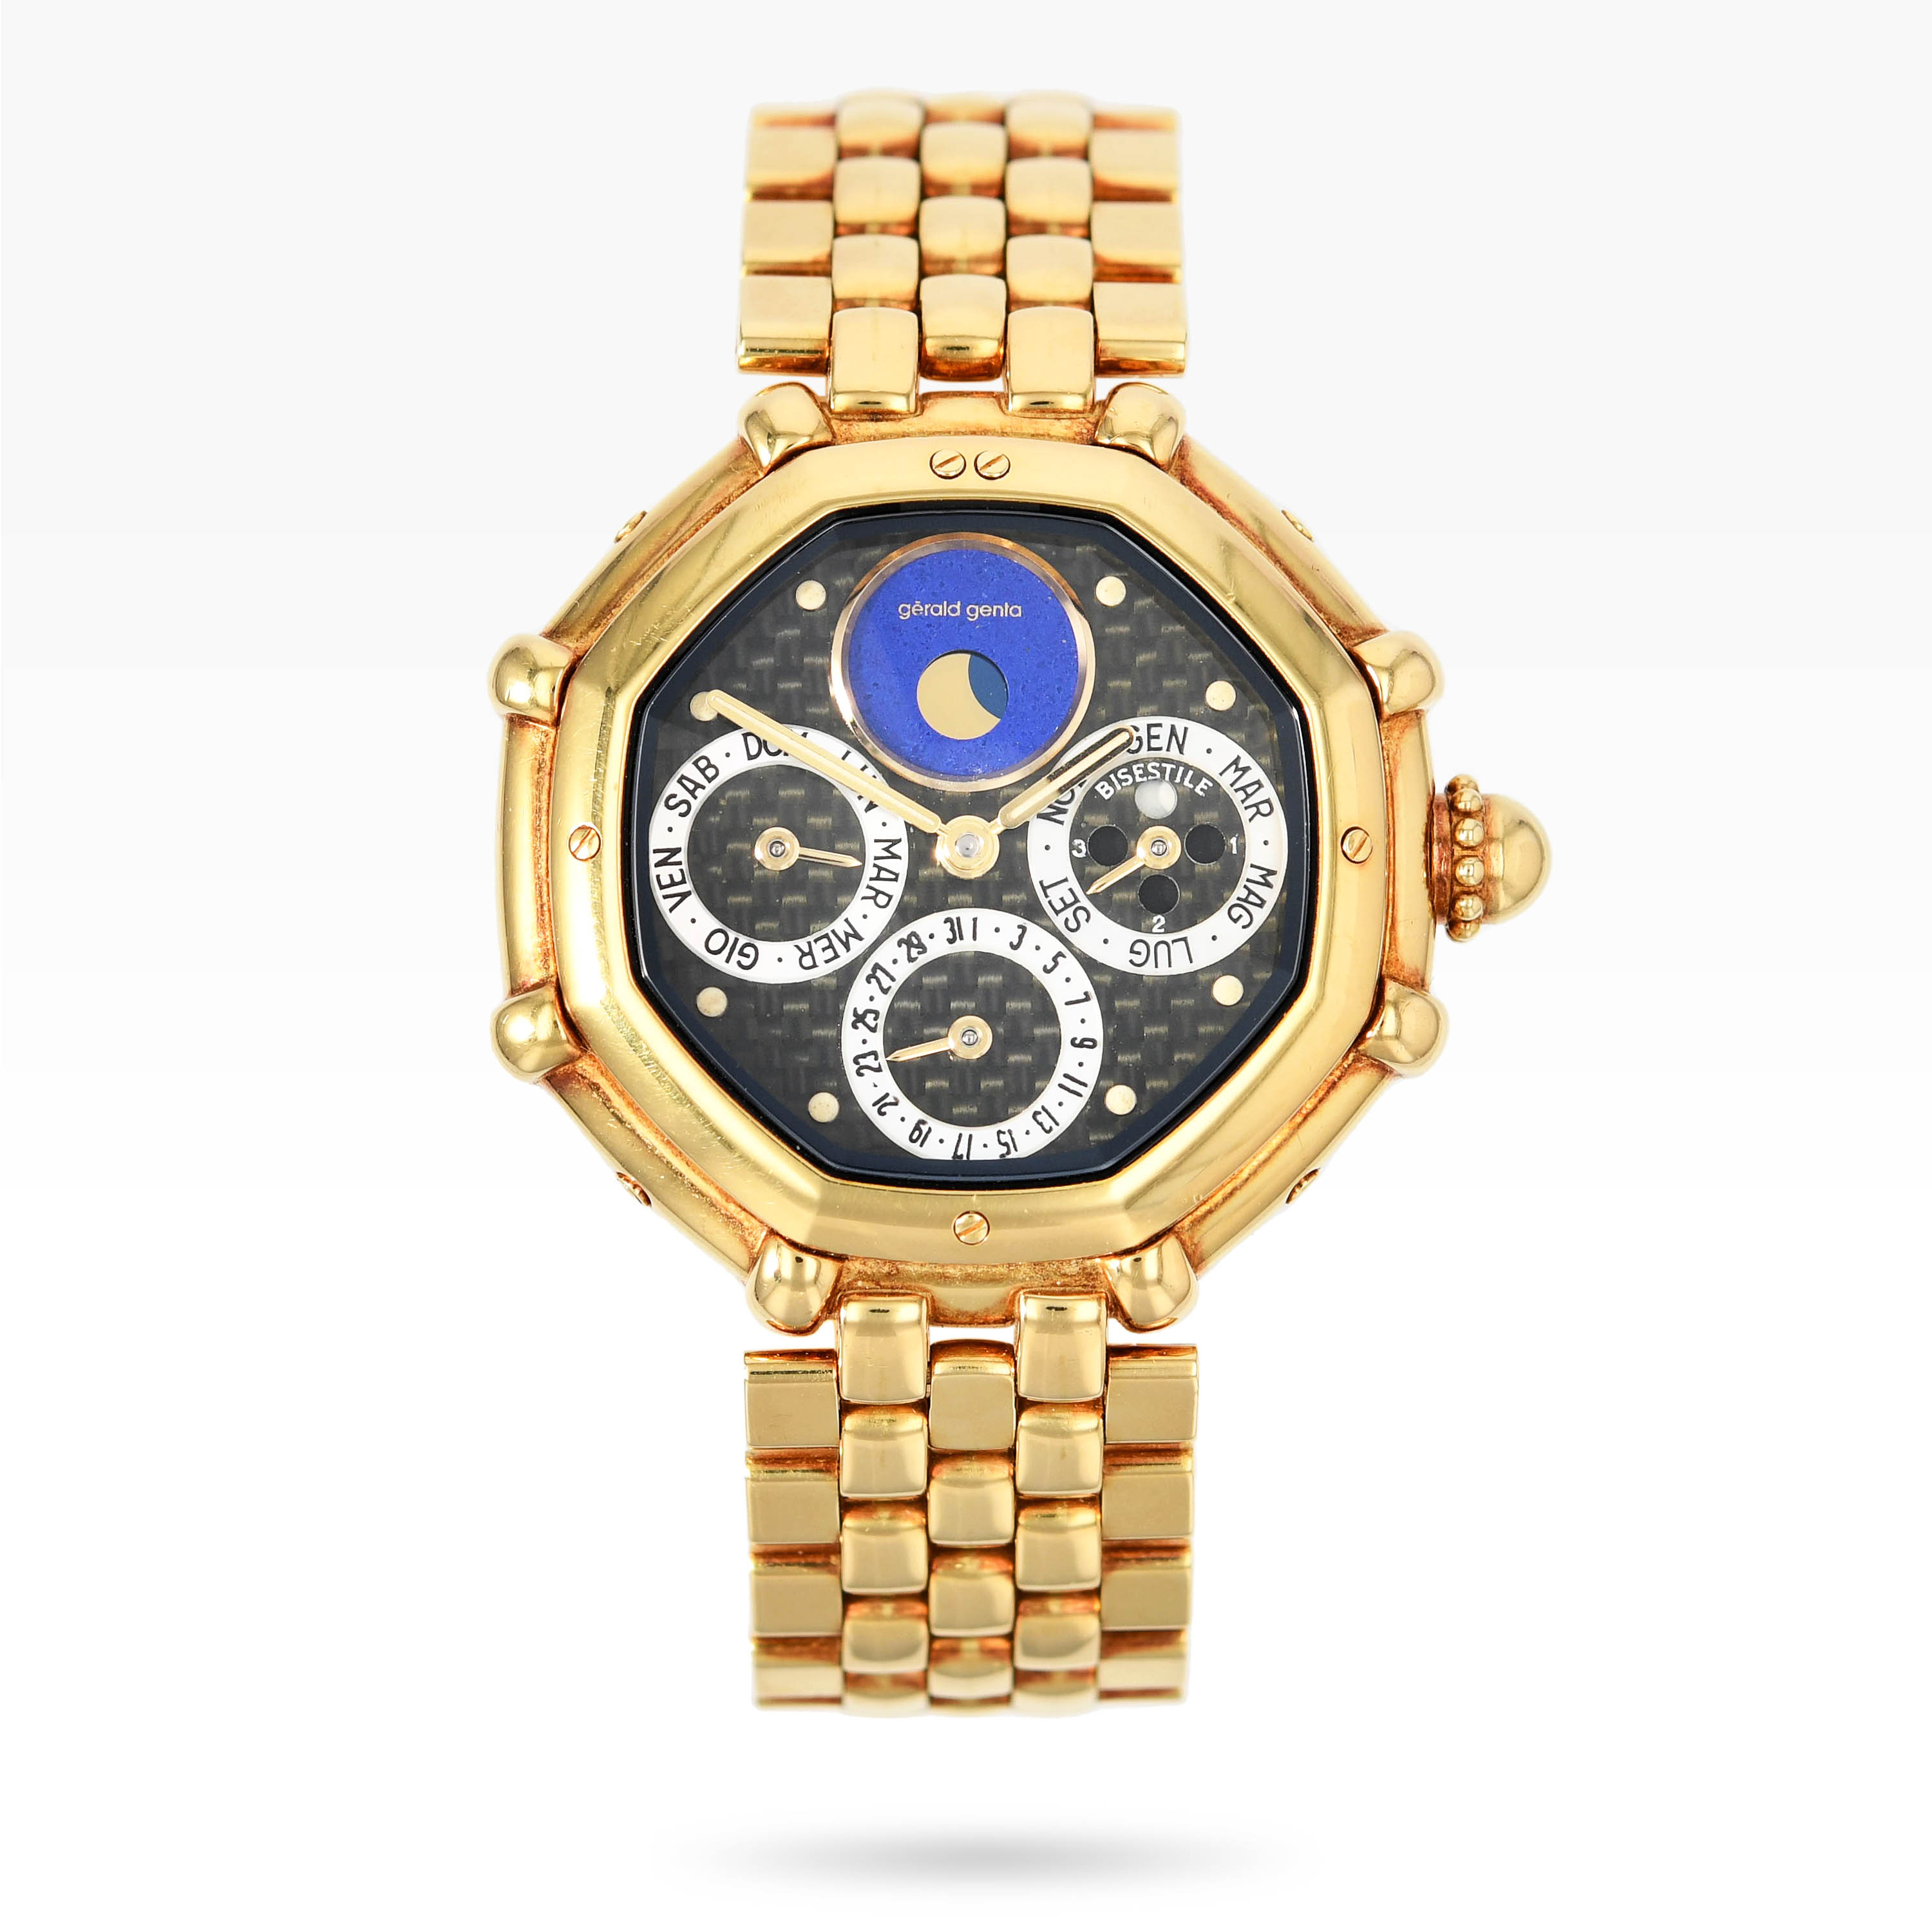 Gerald-genta-success-g33747-automatic-carbon-dial-bracelet-watch-img-main1